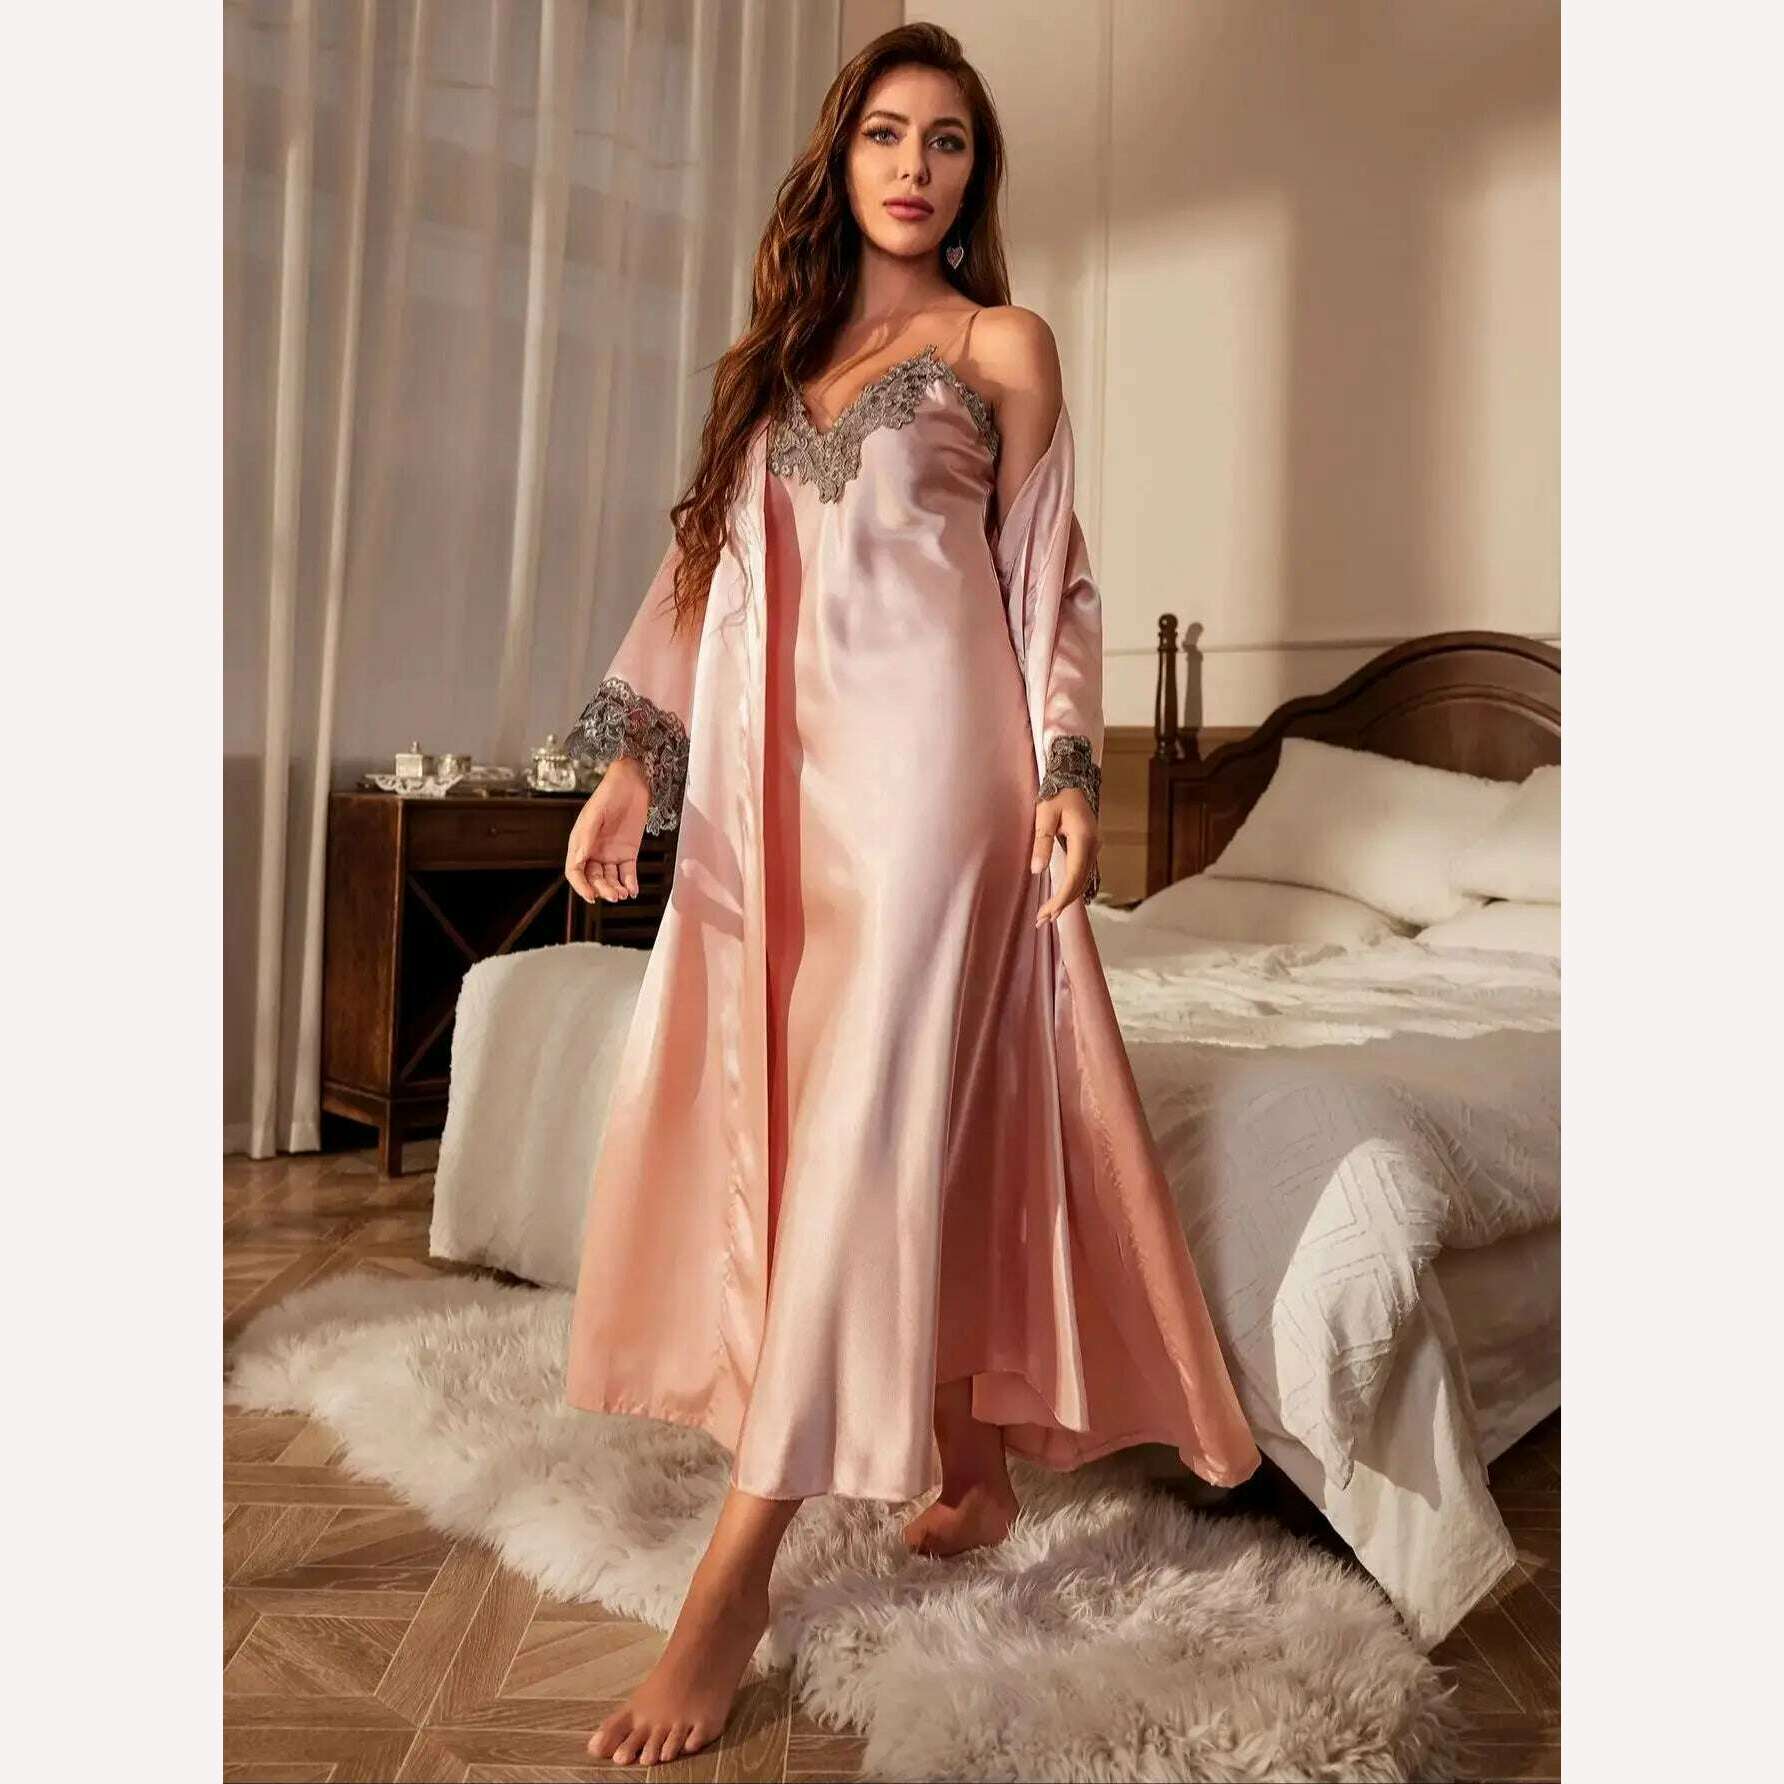 Contrast Lace Pajama Set Long Sleeve Robe With Belt  V Neck Slip Dress Women's Sleepwear  Loungewear, Pink / S, KIMLUD Women's Clothes